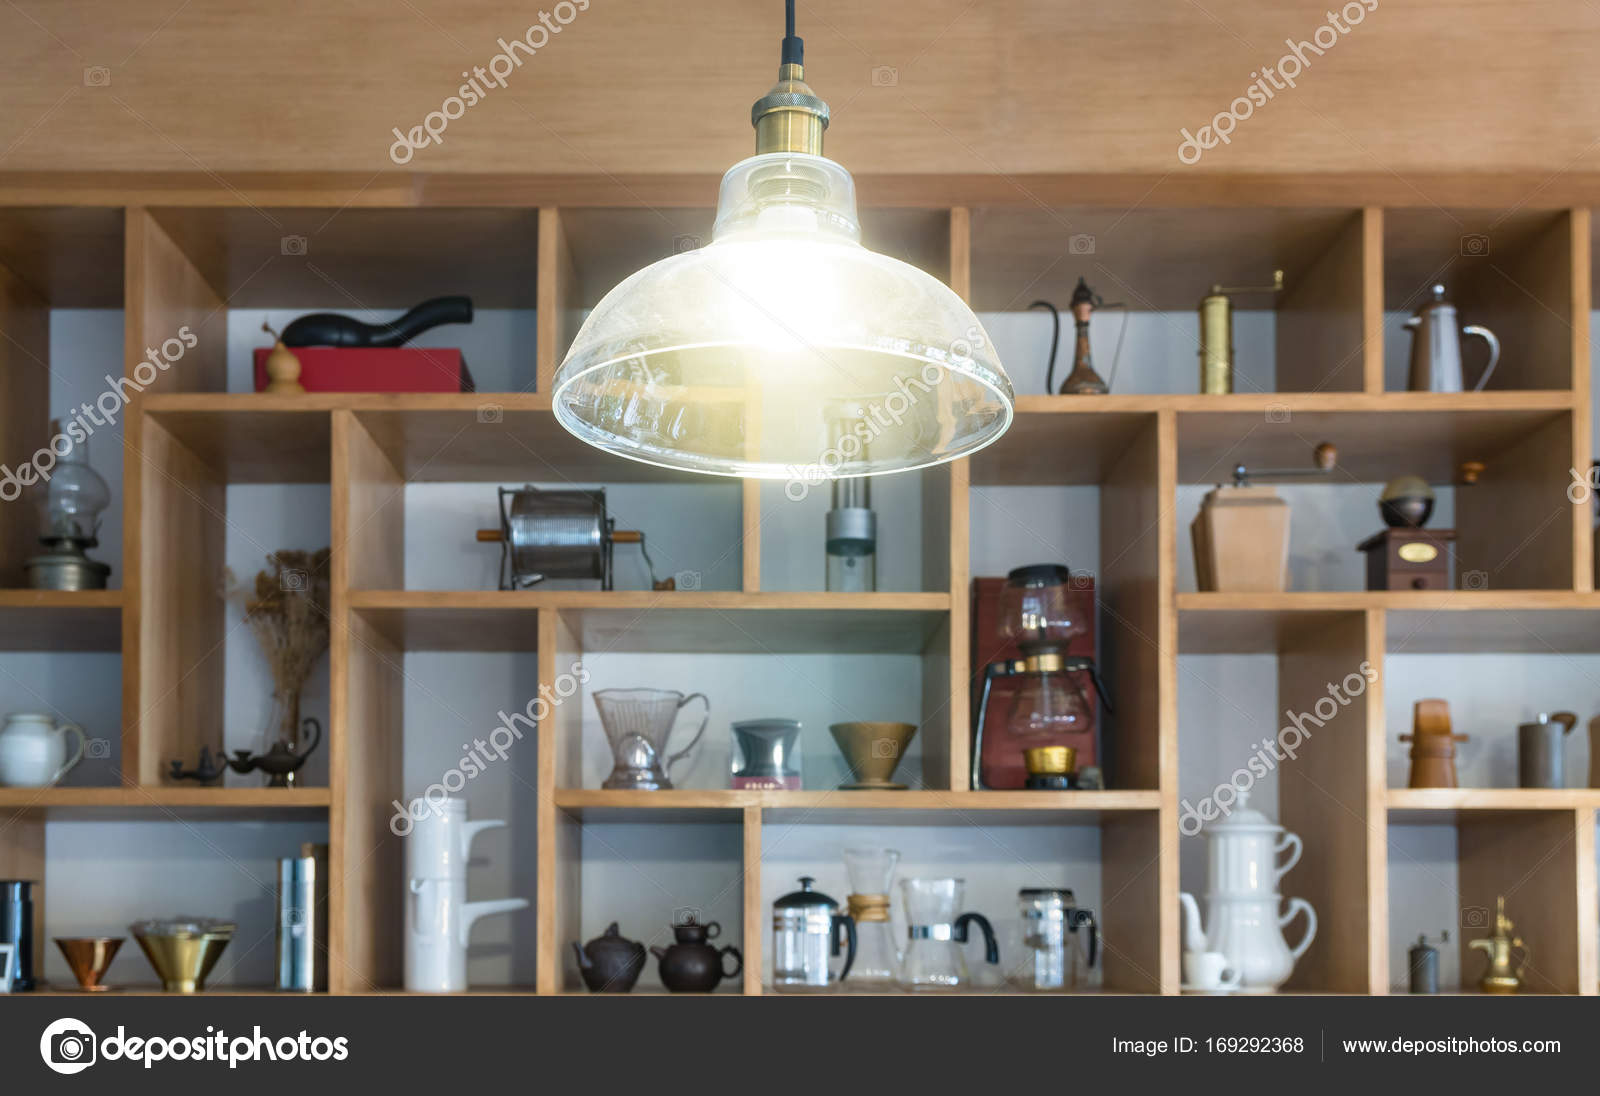 https://st3.depositphotos.com/2712843/16929/i/1600/depositphotos_169292368-stock-photo-coffee-shop-accessories-in-shelf.jpg